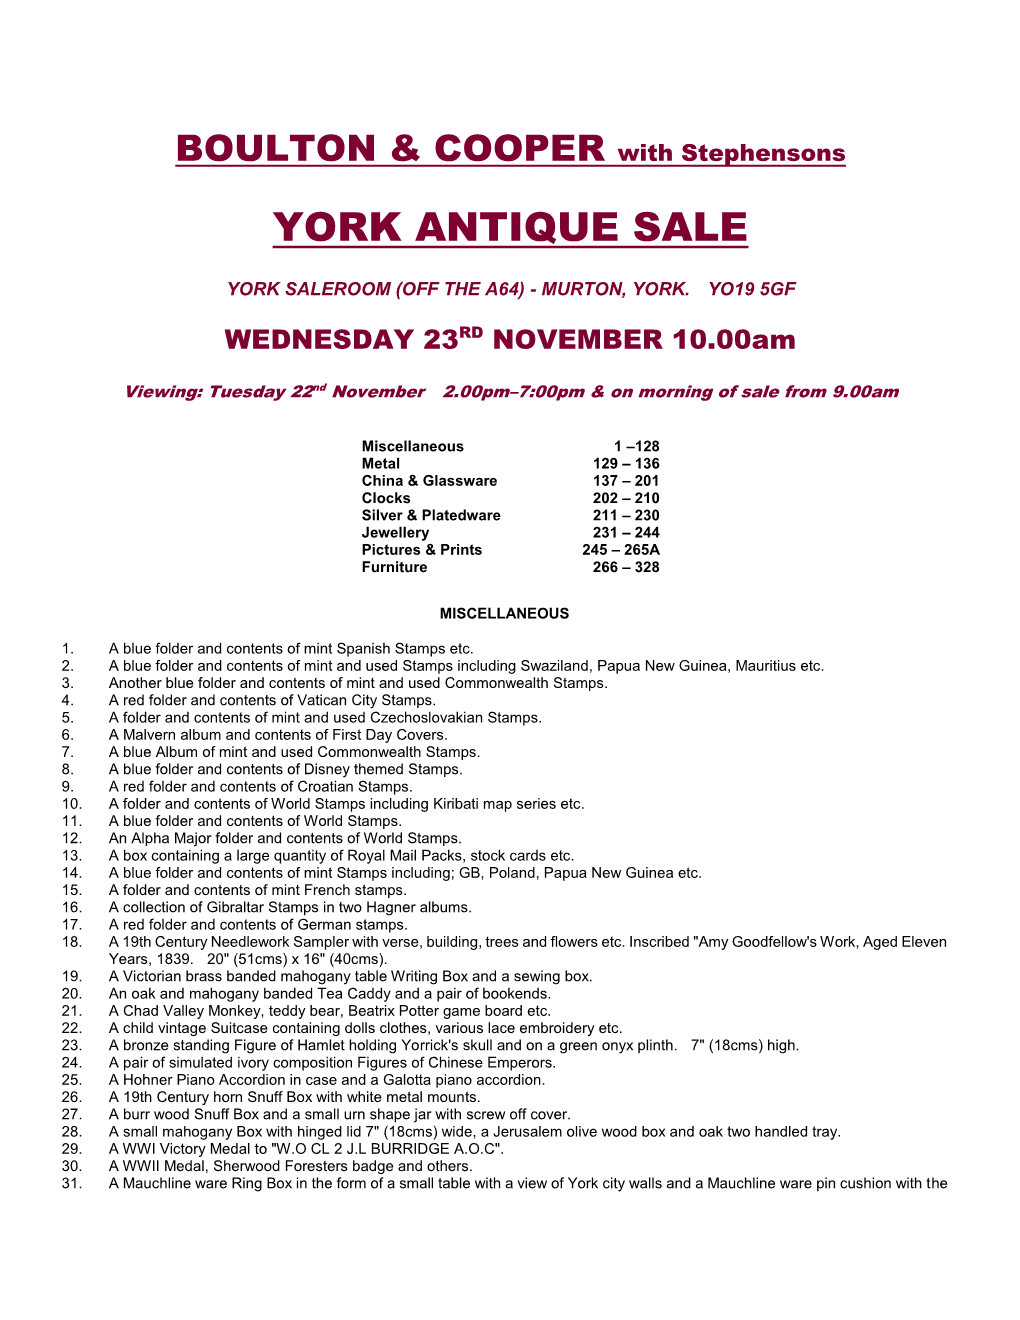 York Antique Sale